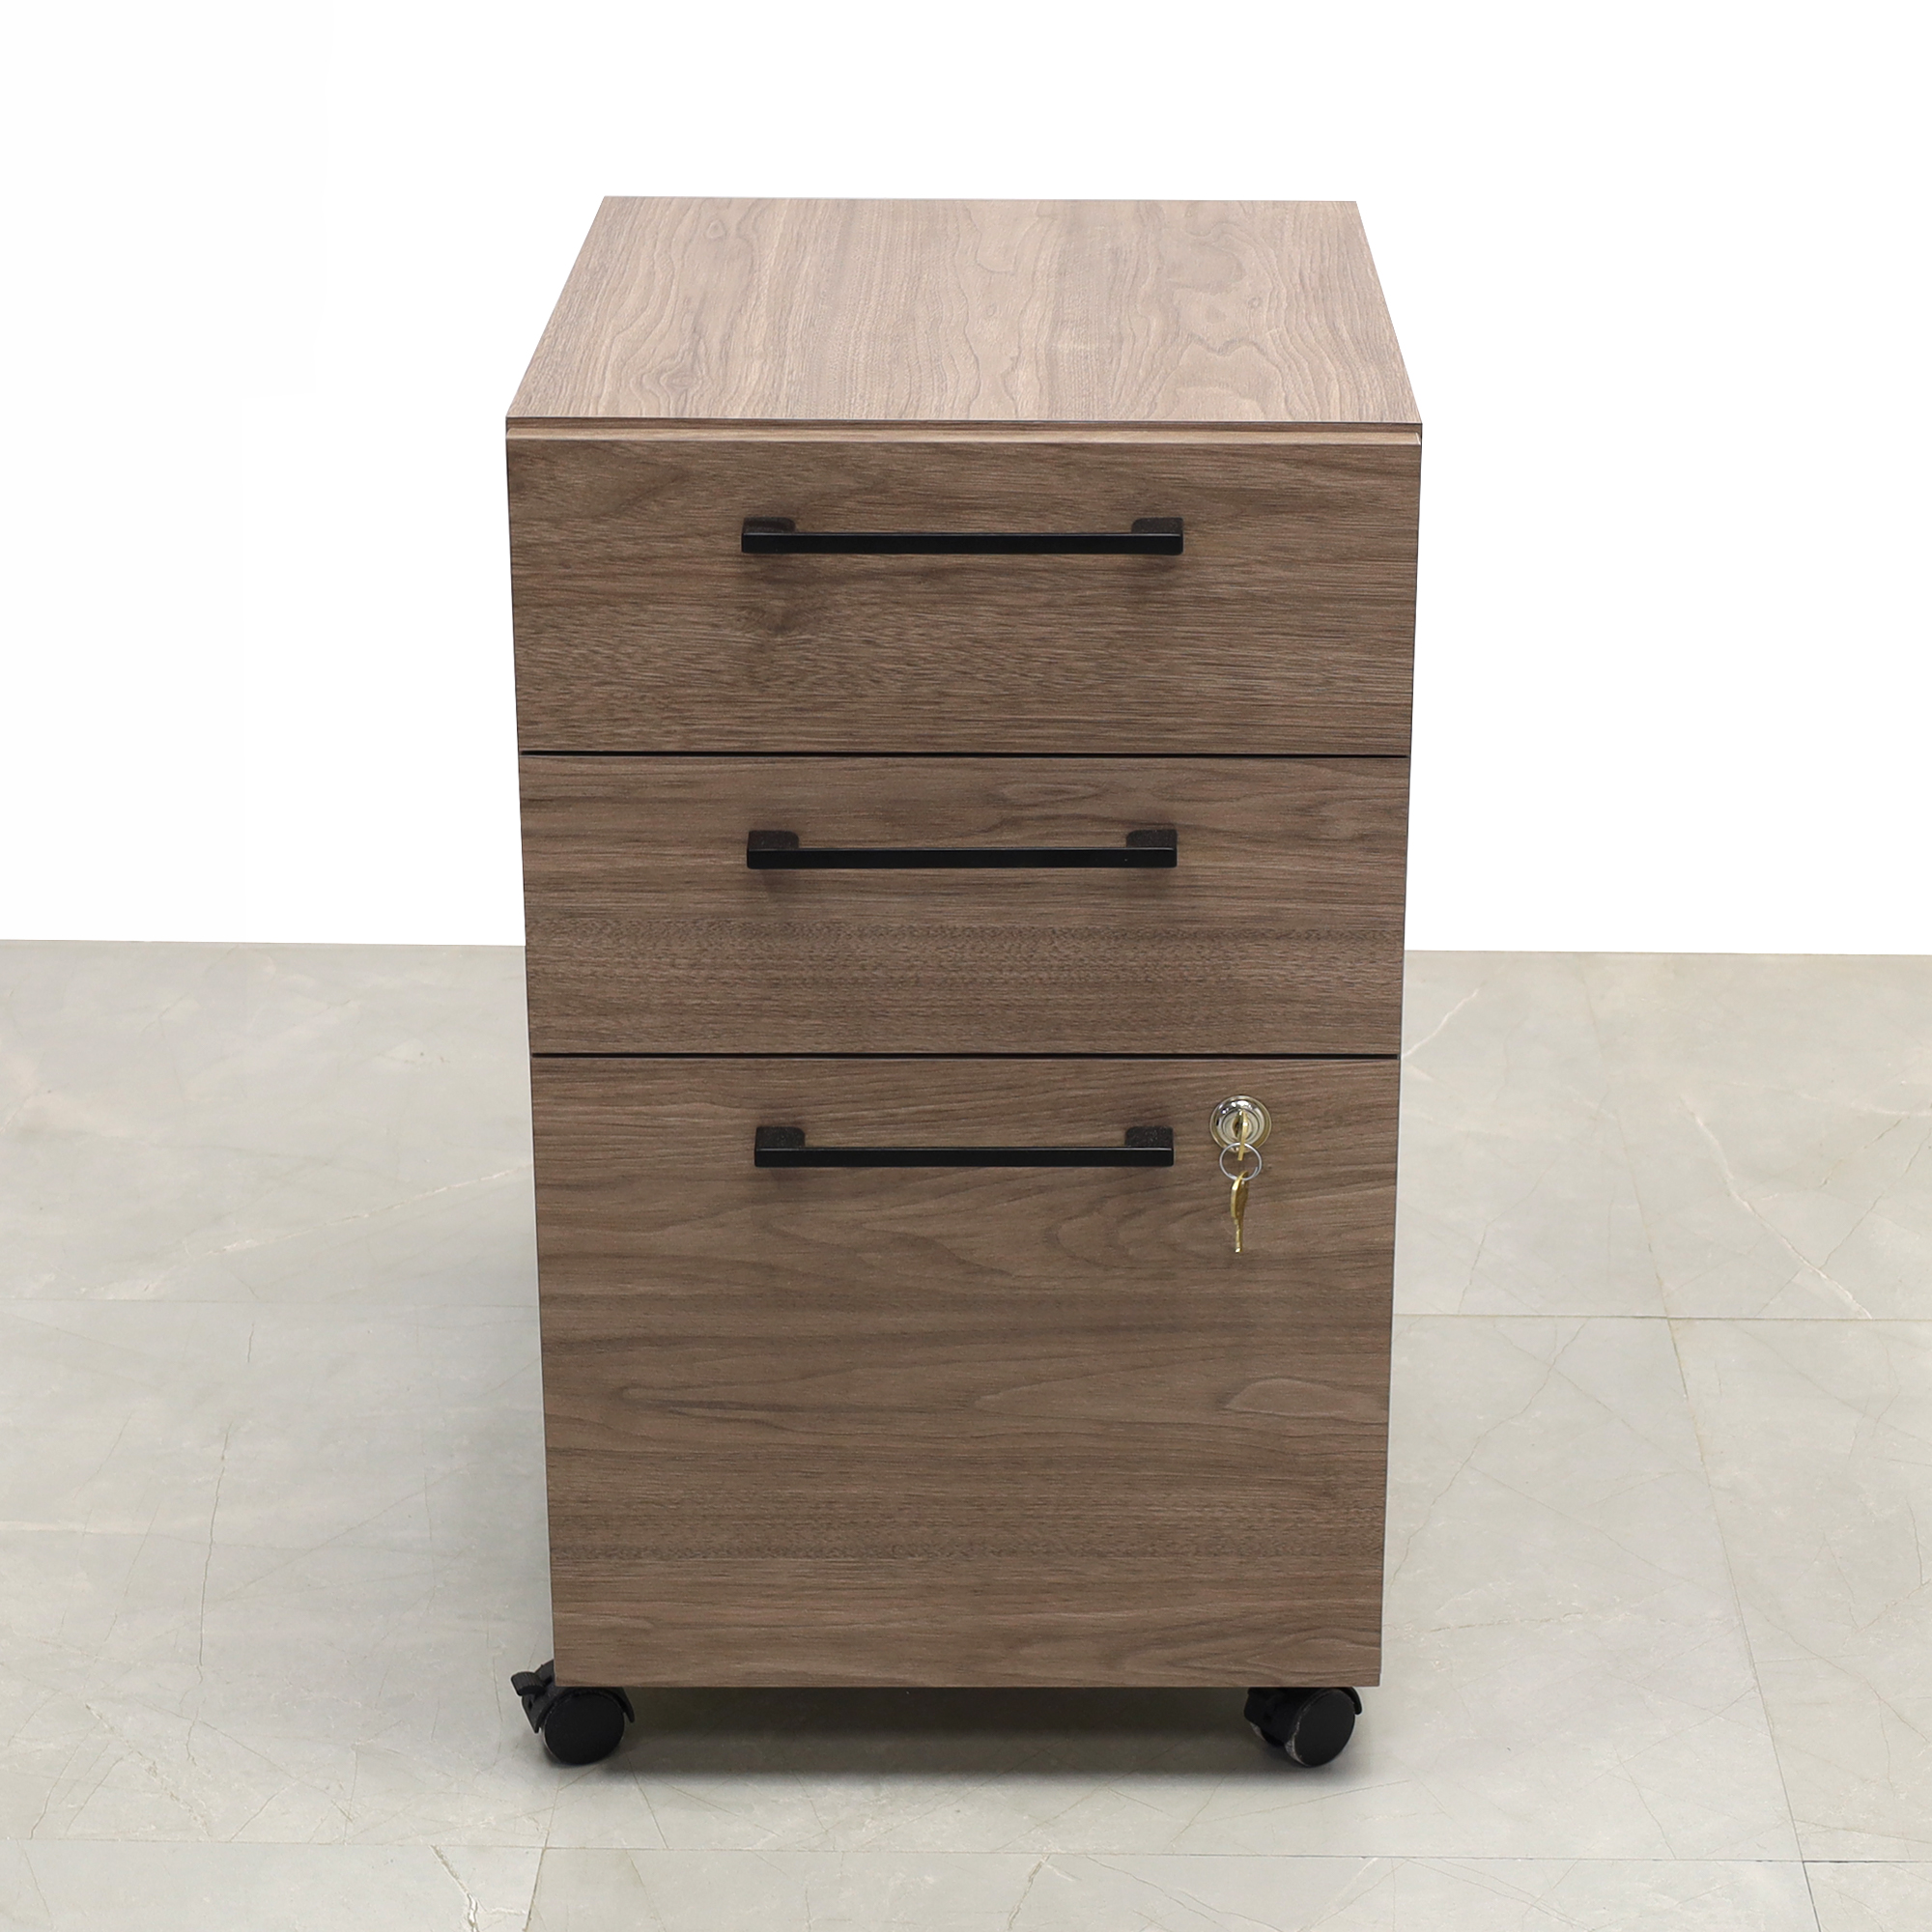 Naples Custom Mobile Storage Cabinet in hazel walnut matte laminate and lock on third drawer, shown here.